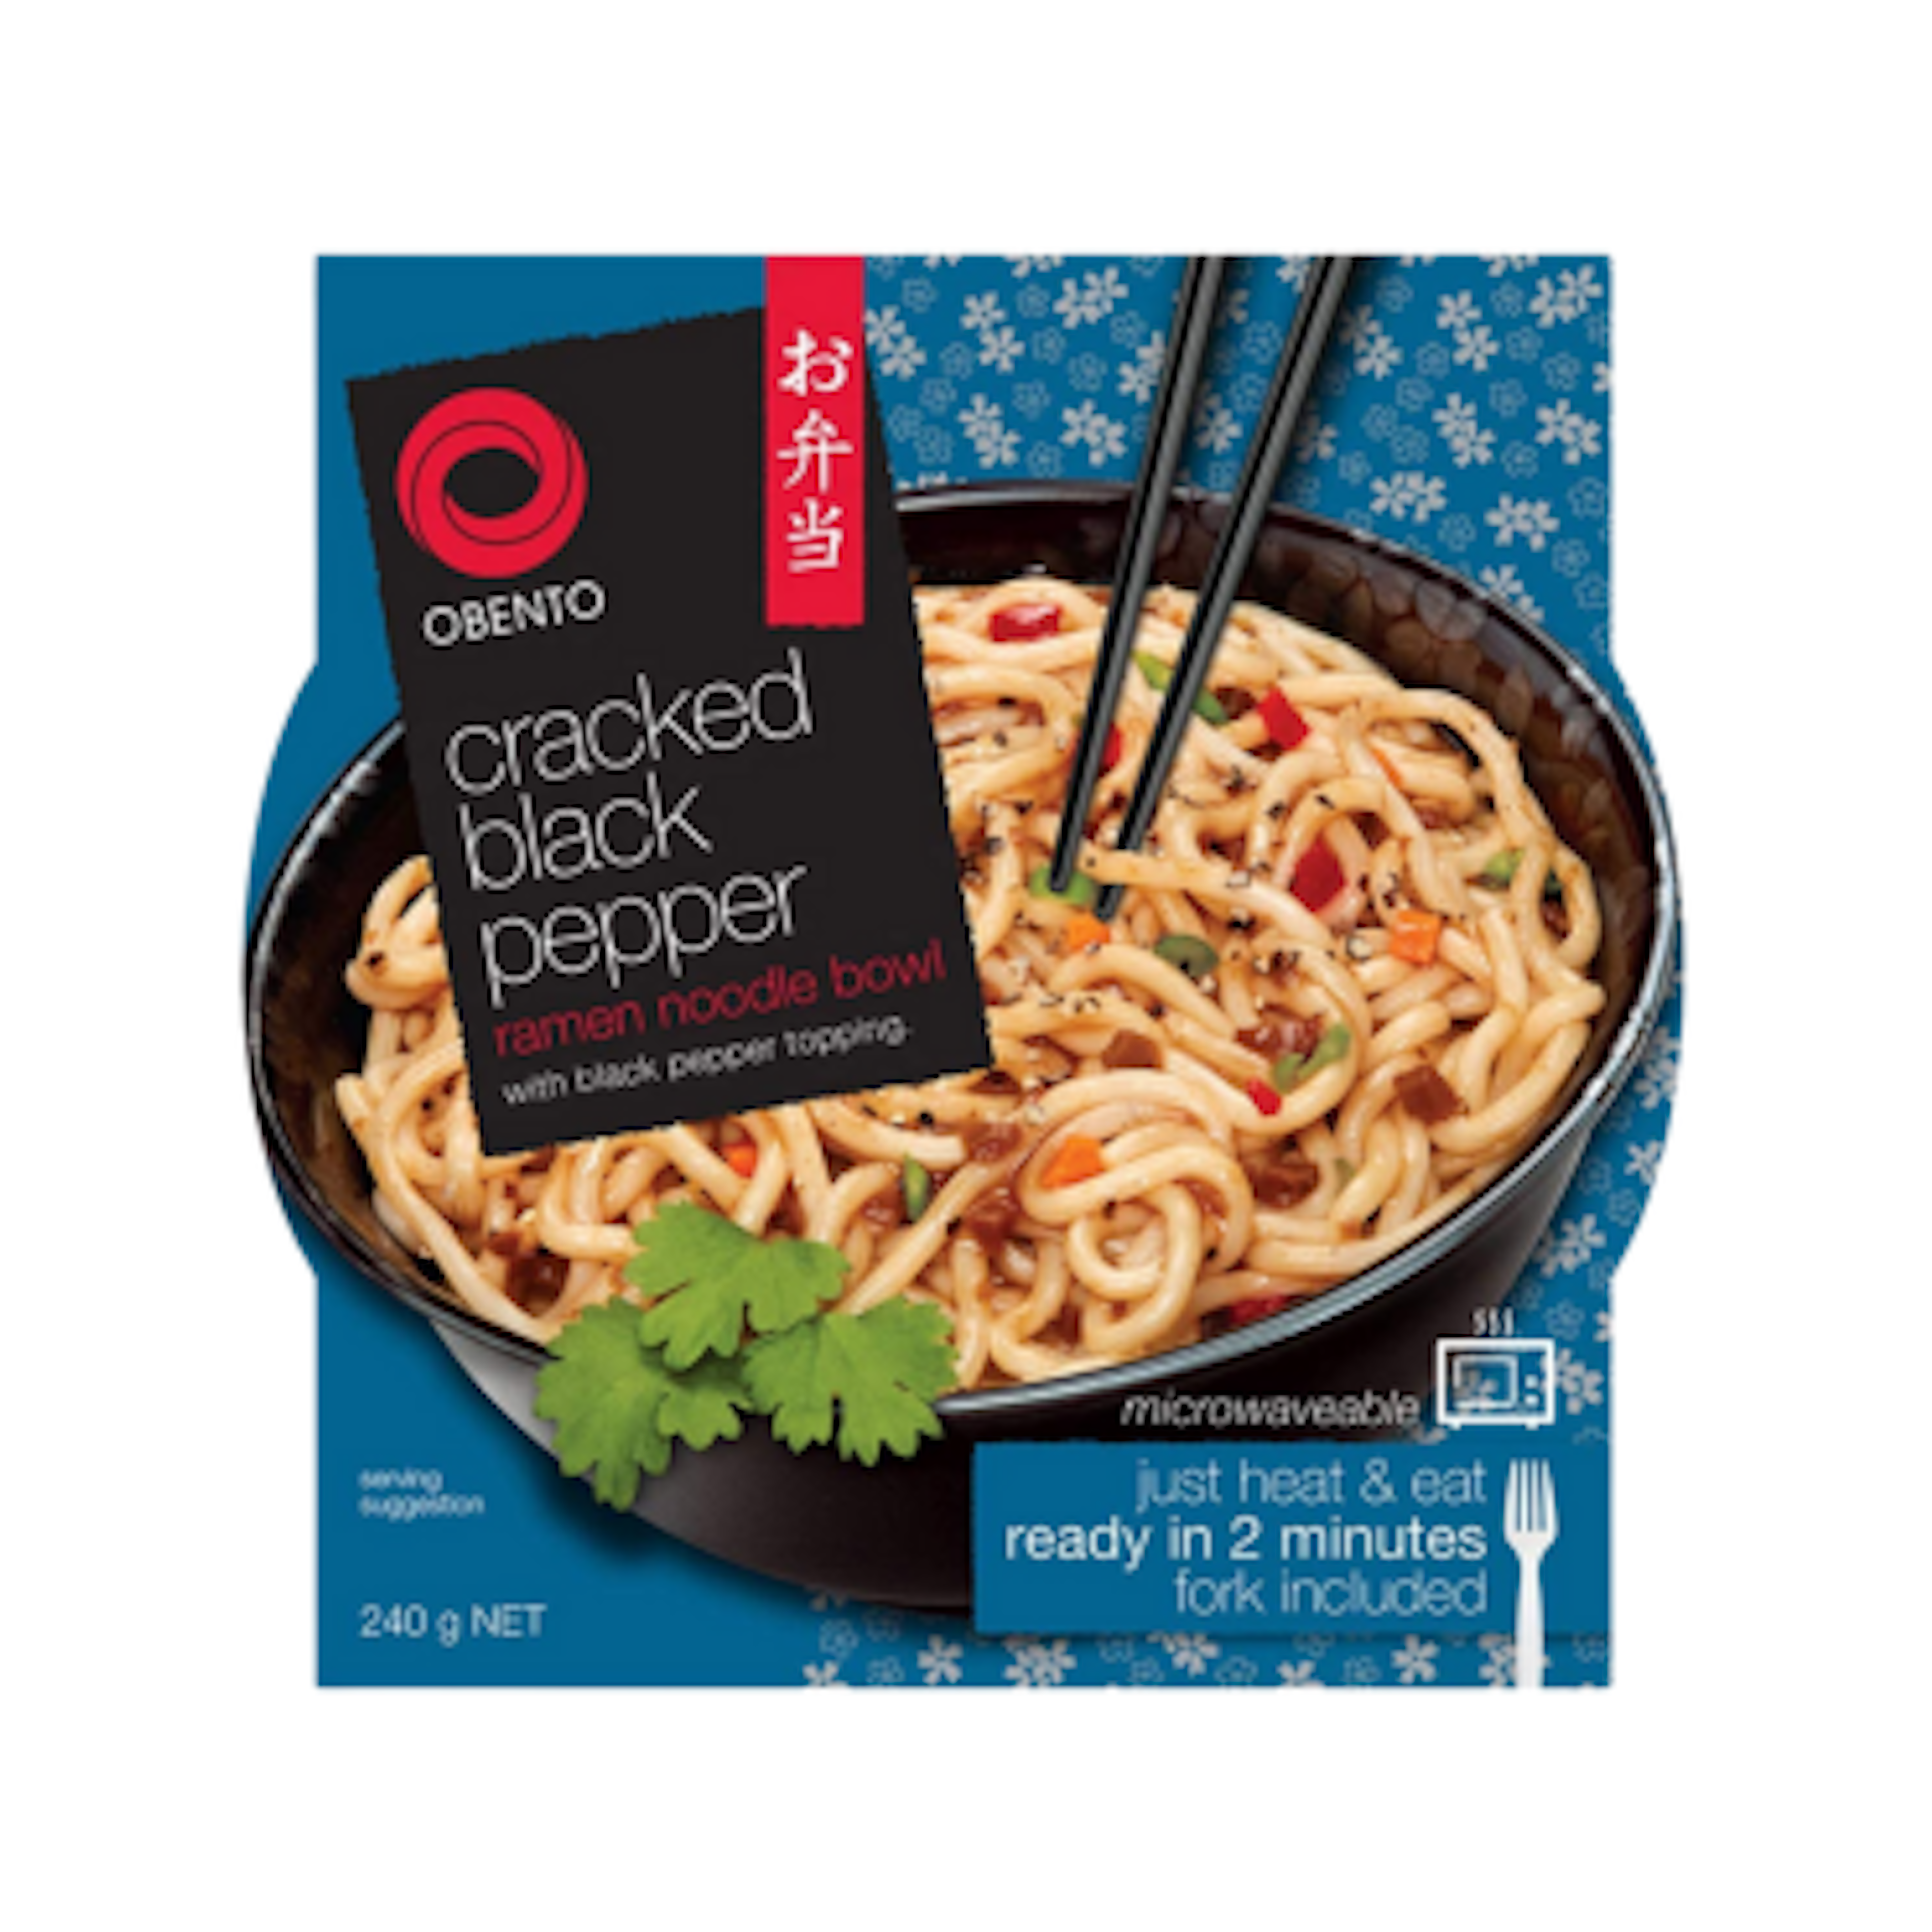 Obento Cracked Black Pepper Ramen Noodle Bowl - Würzige Ramen mit schwarzem Pfeffer Topping, 240g